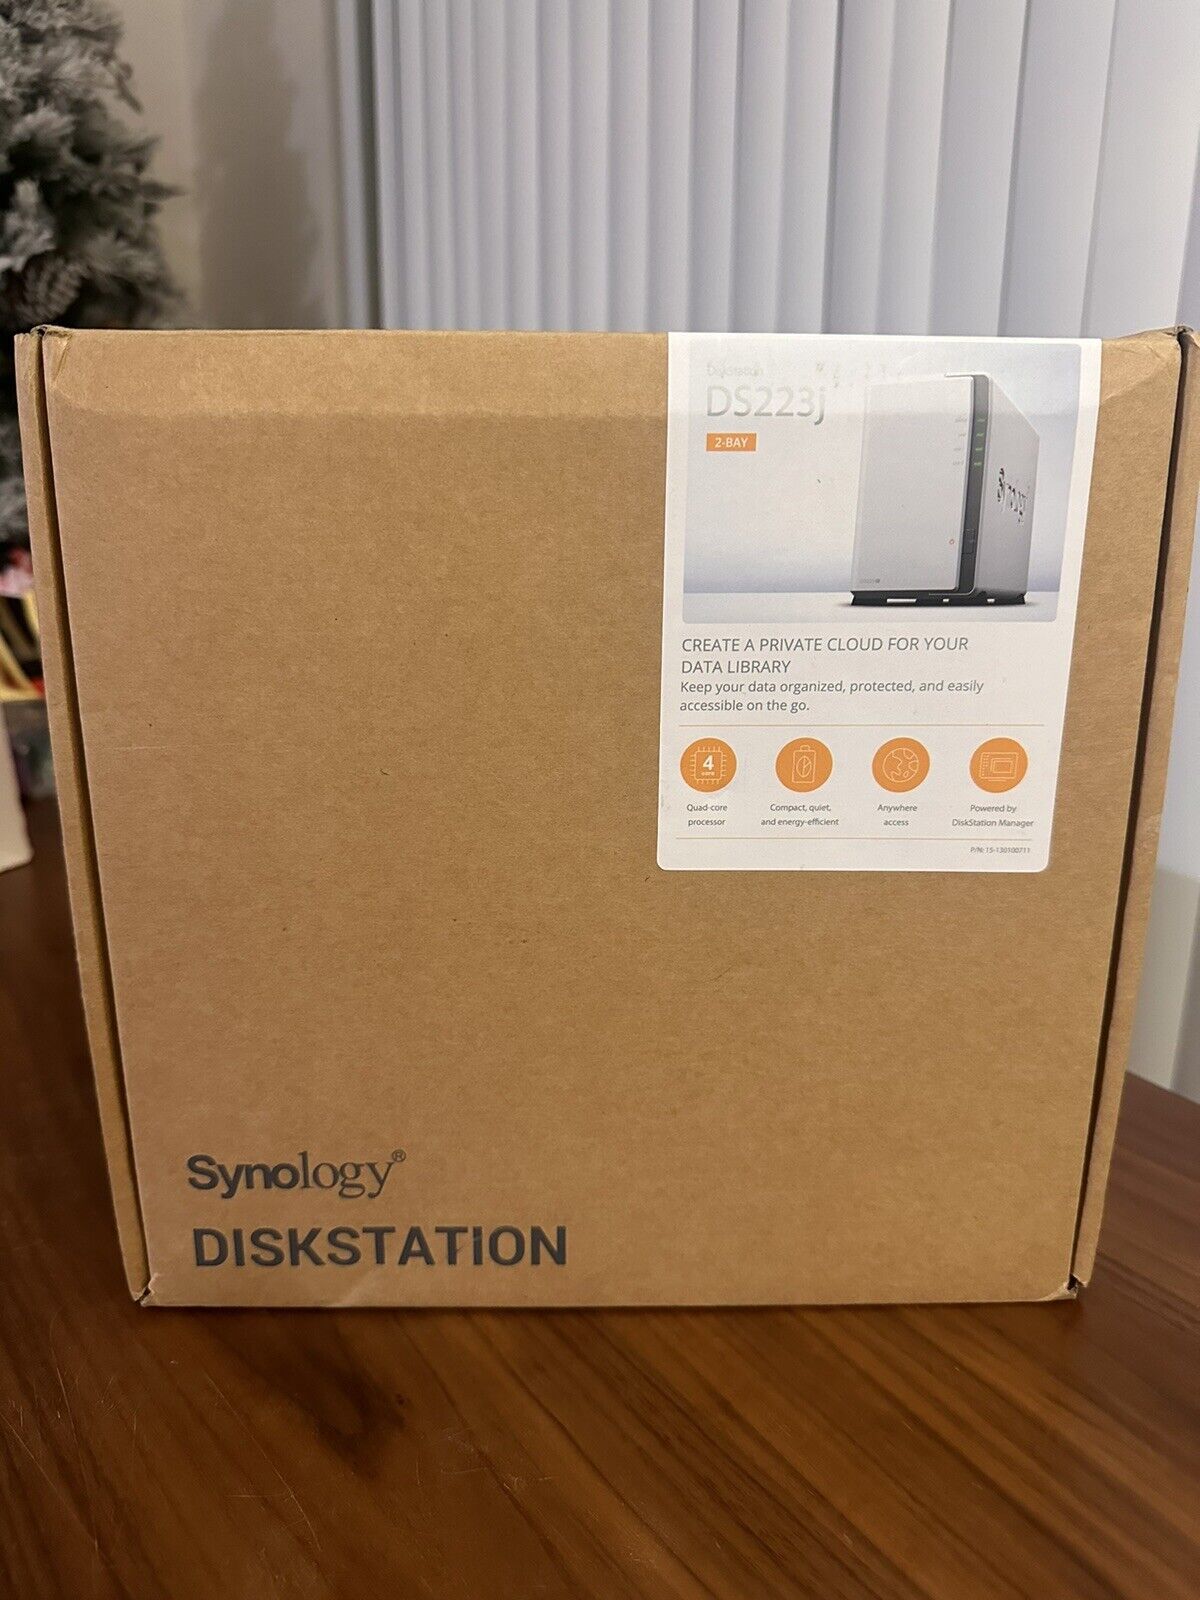 Synology DiskStation DS223j 2 Bay - Brand New Open Box